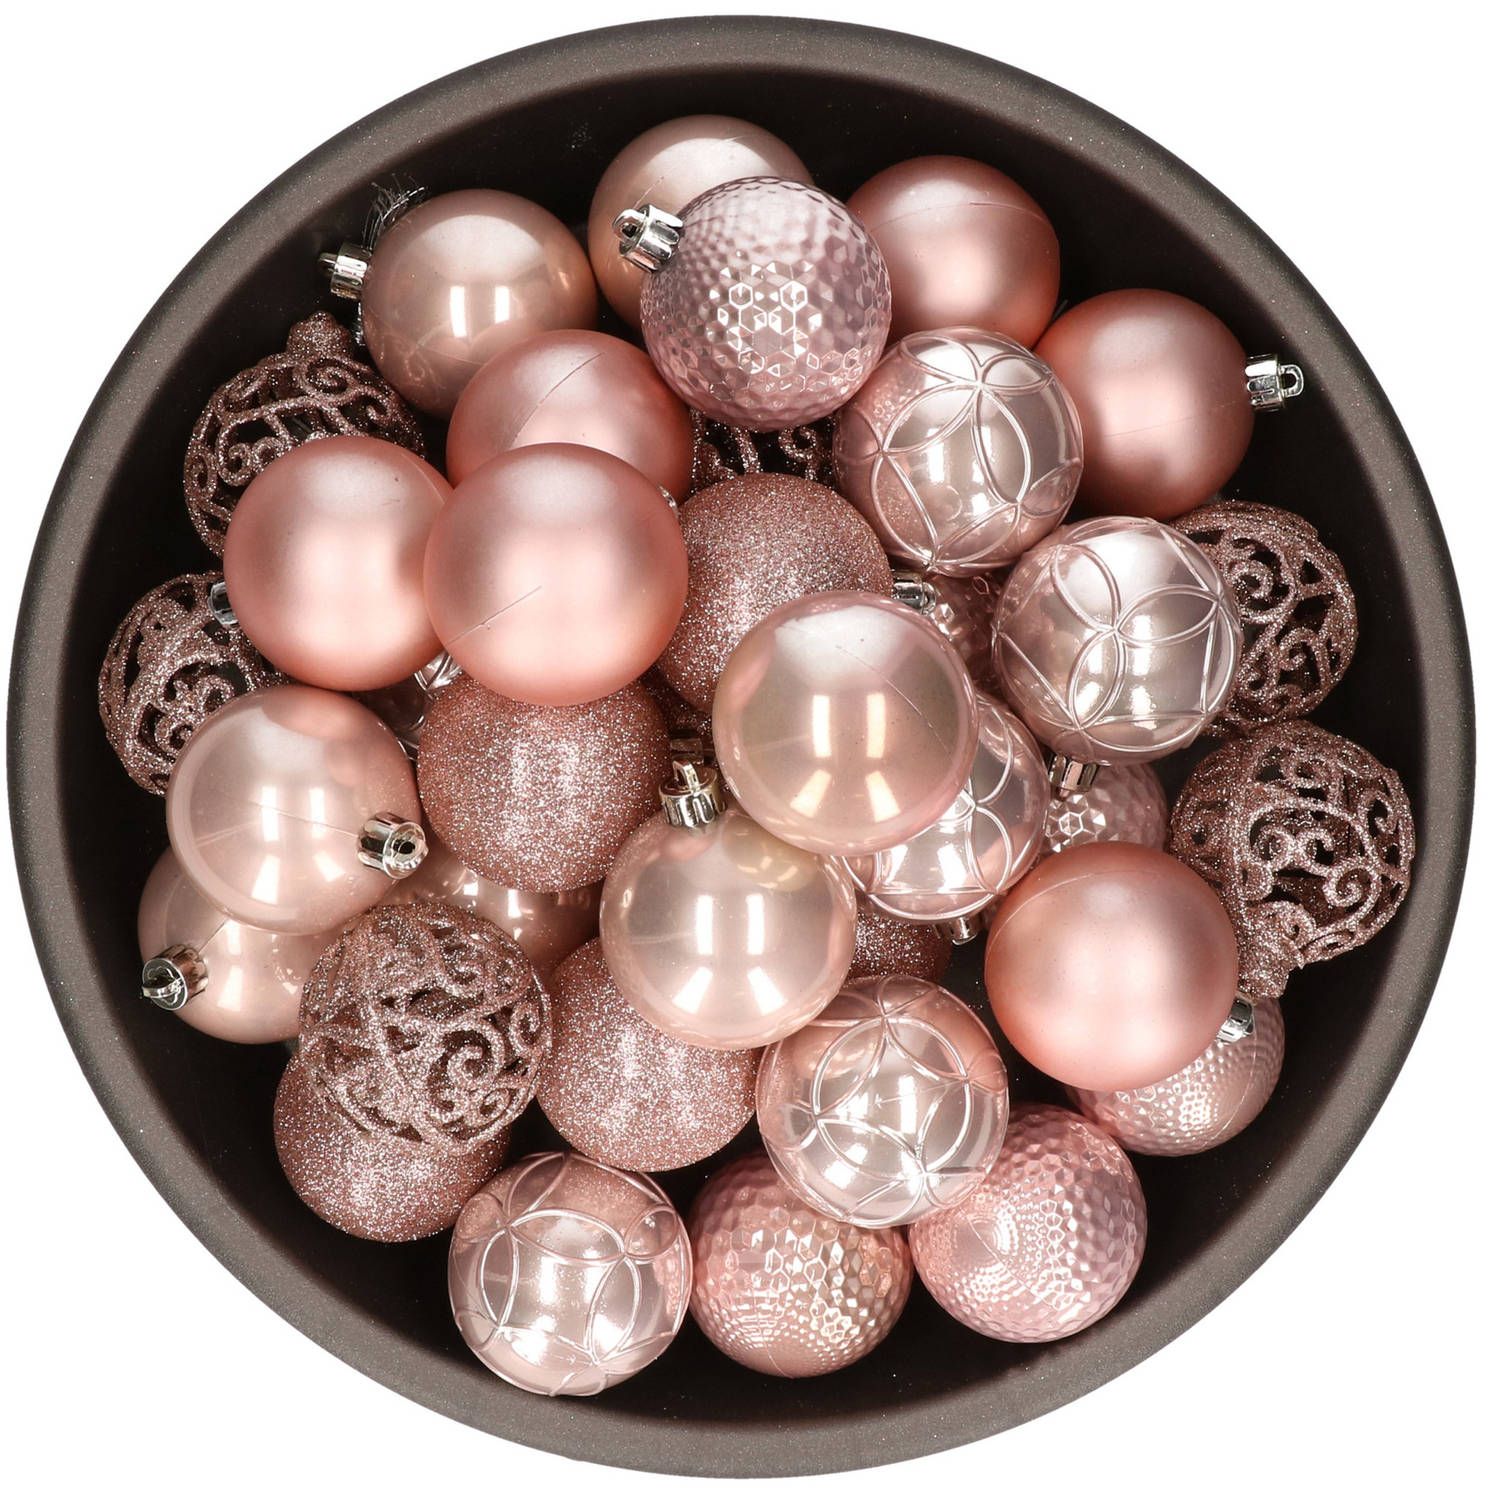 37x Stuks Kunststof Kerstballen Lichtroze (Blush Pink) 6 Cm Glans-mat-glitter Mix Kerstbal